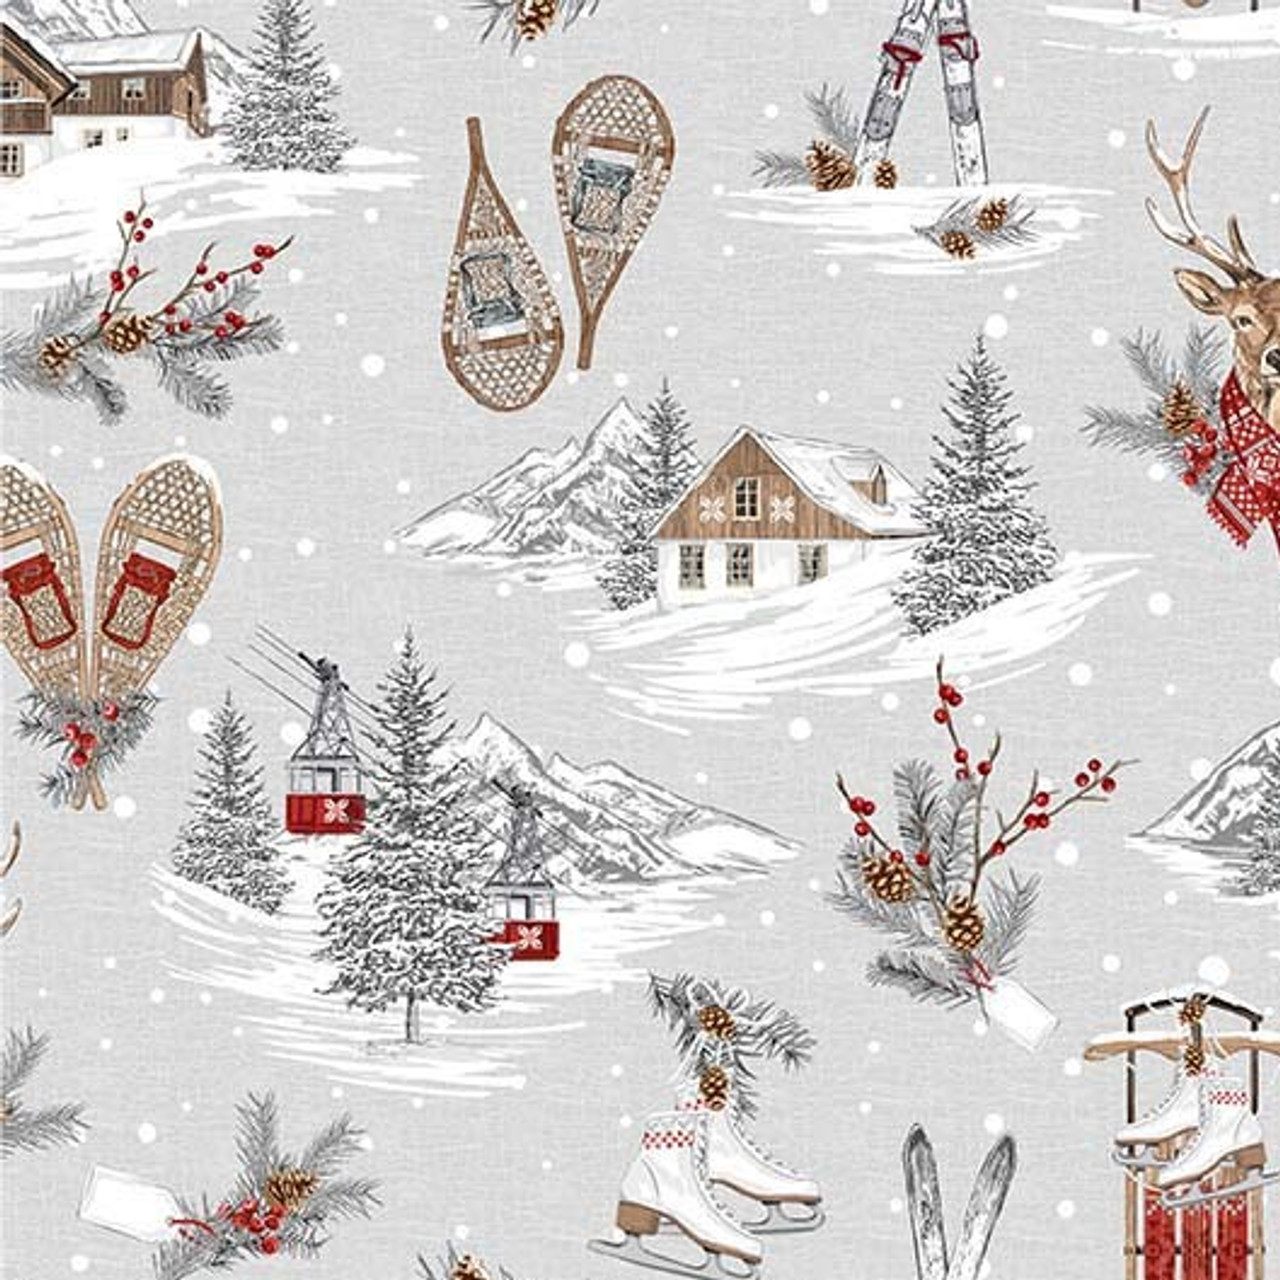 Winter Cabins Quilt Pattern Download